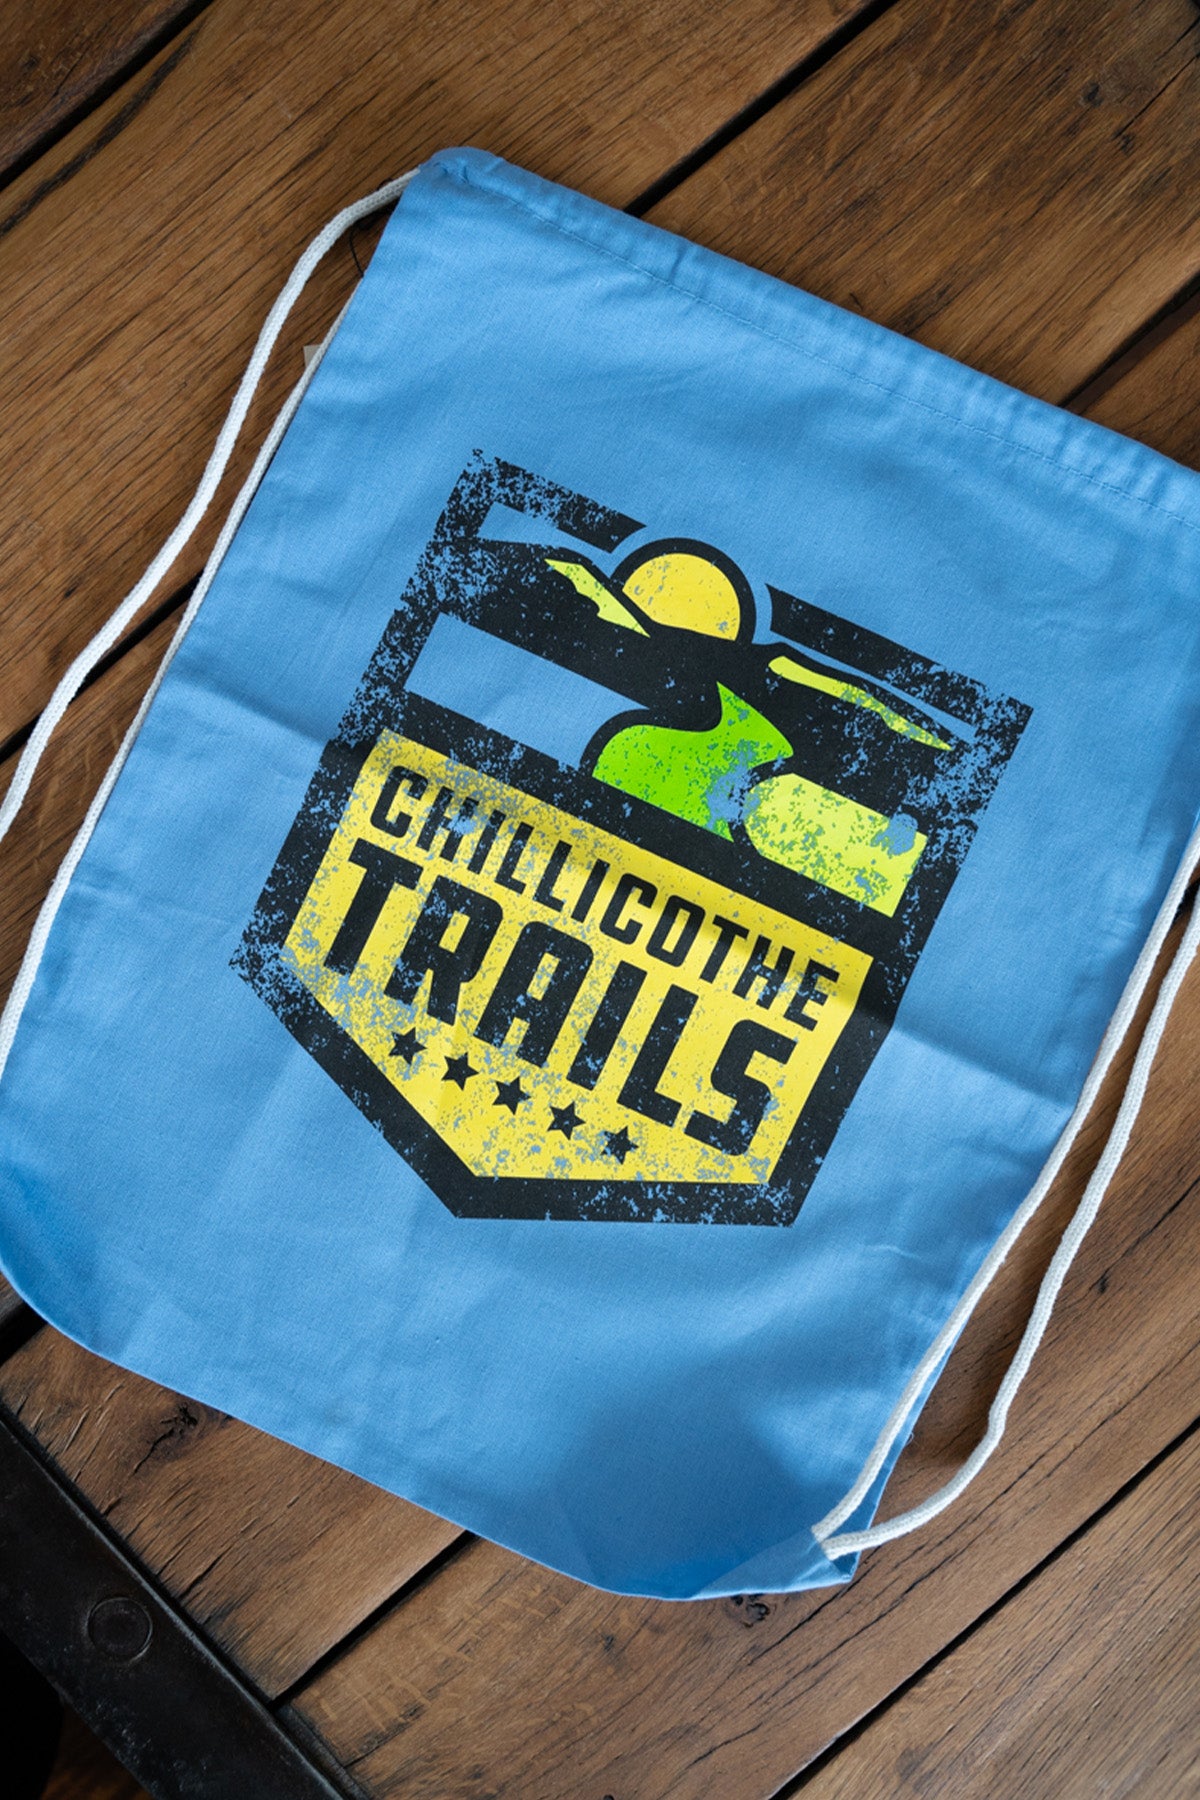 Chillicothe Trails Sport Tote (Drawstring Bag)